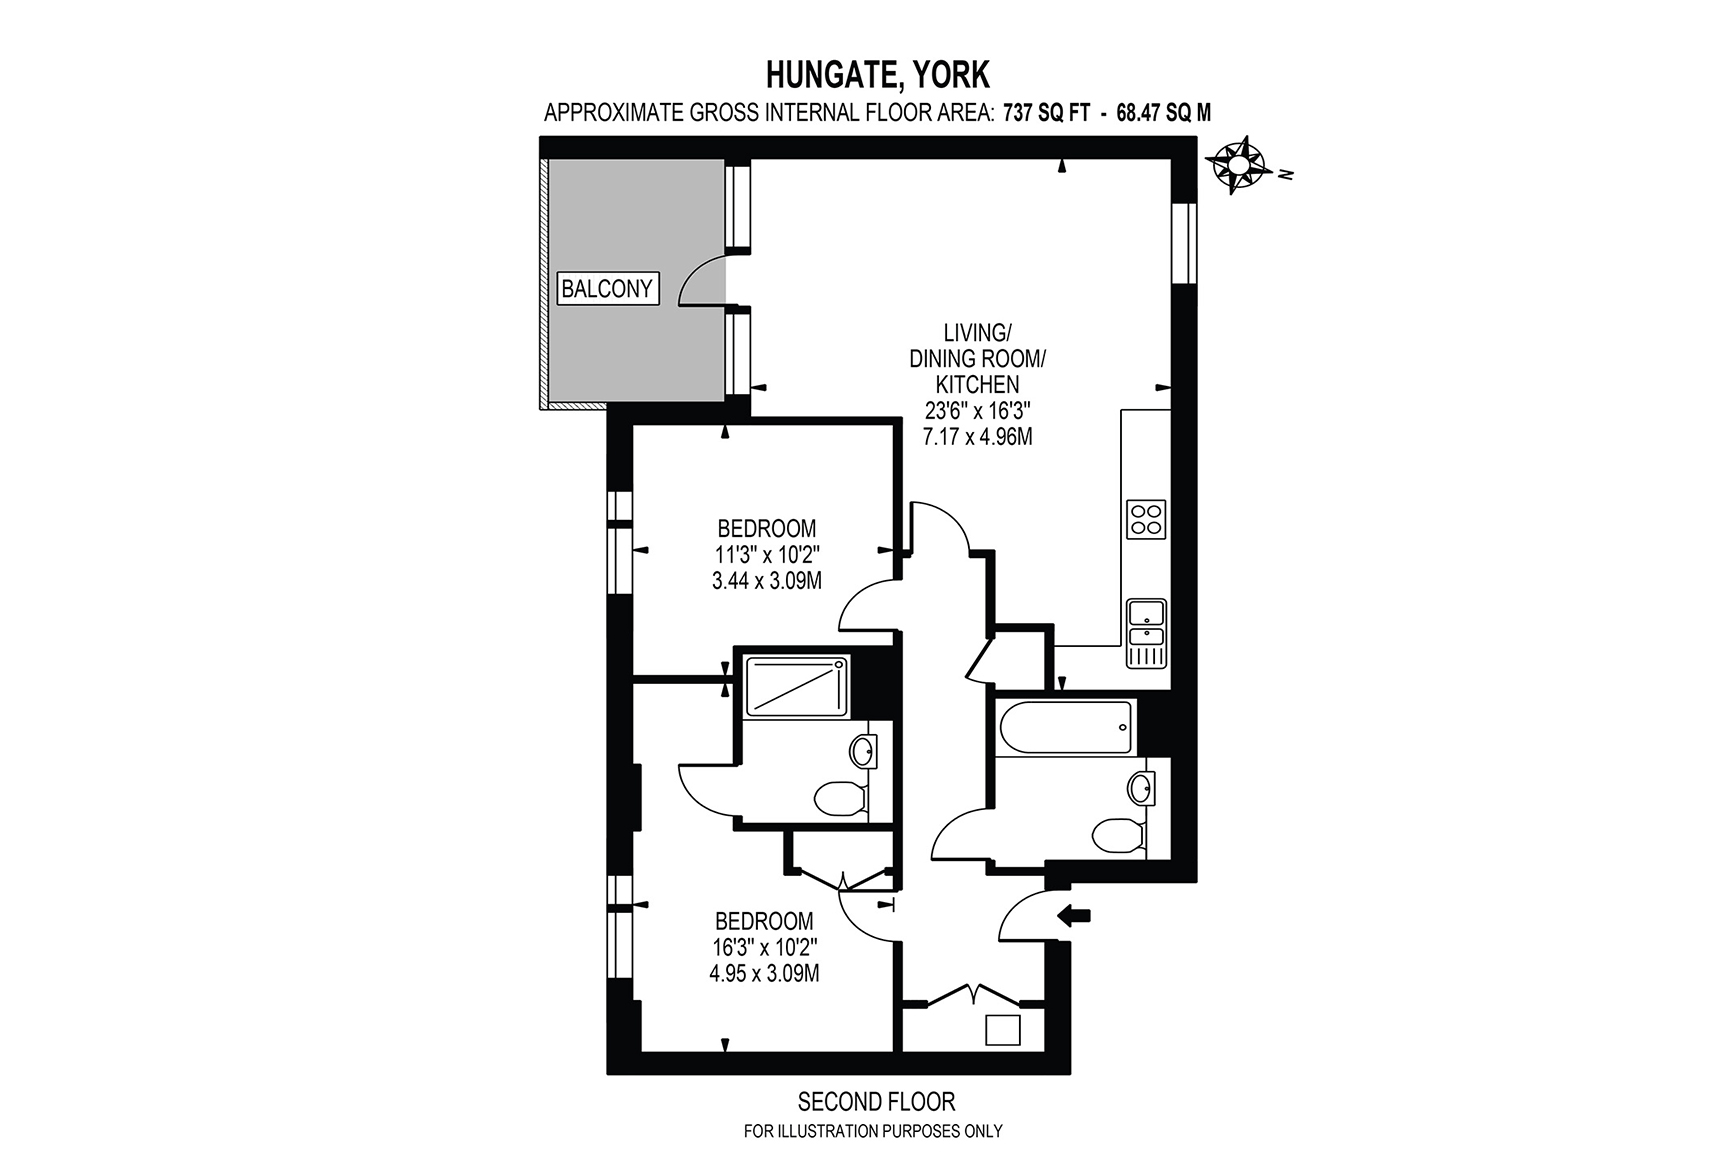 Hungate York two bedroom apartment floor plan